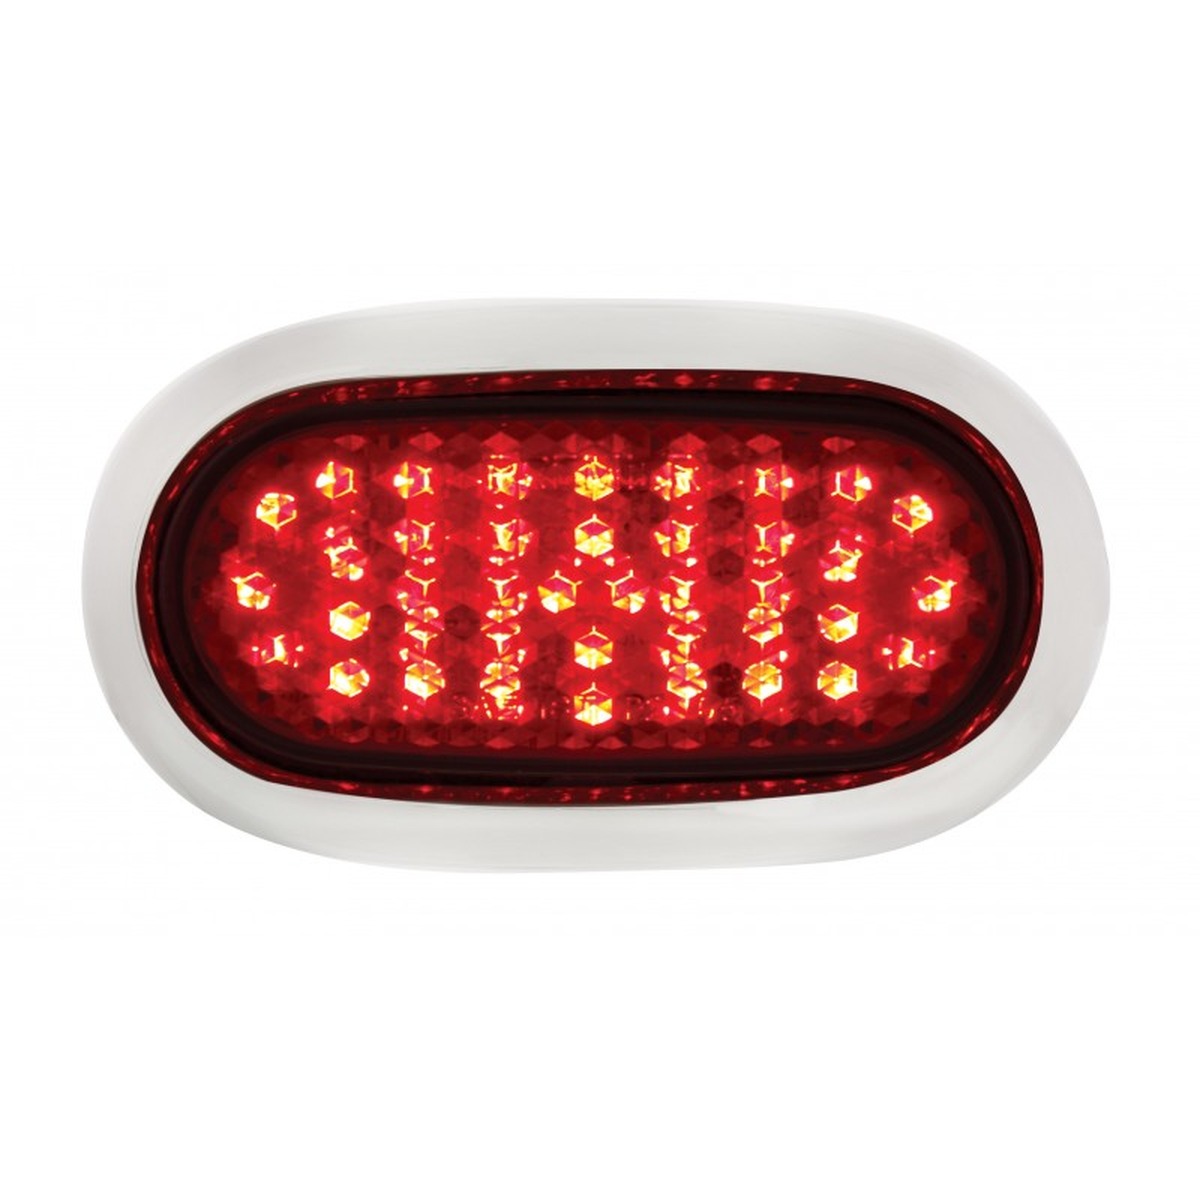 Chevy Tail Lights - 40 LED Vintage Oval S T T Light - Flush Mount - Red LED Red Lens